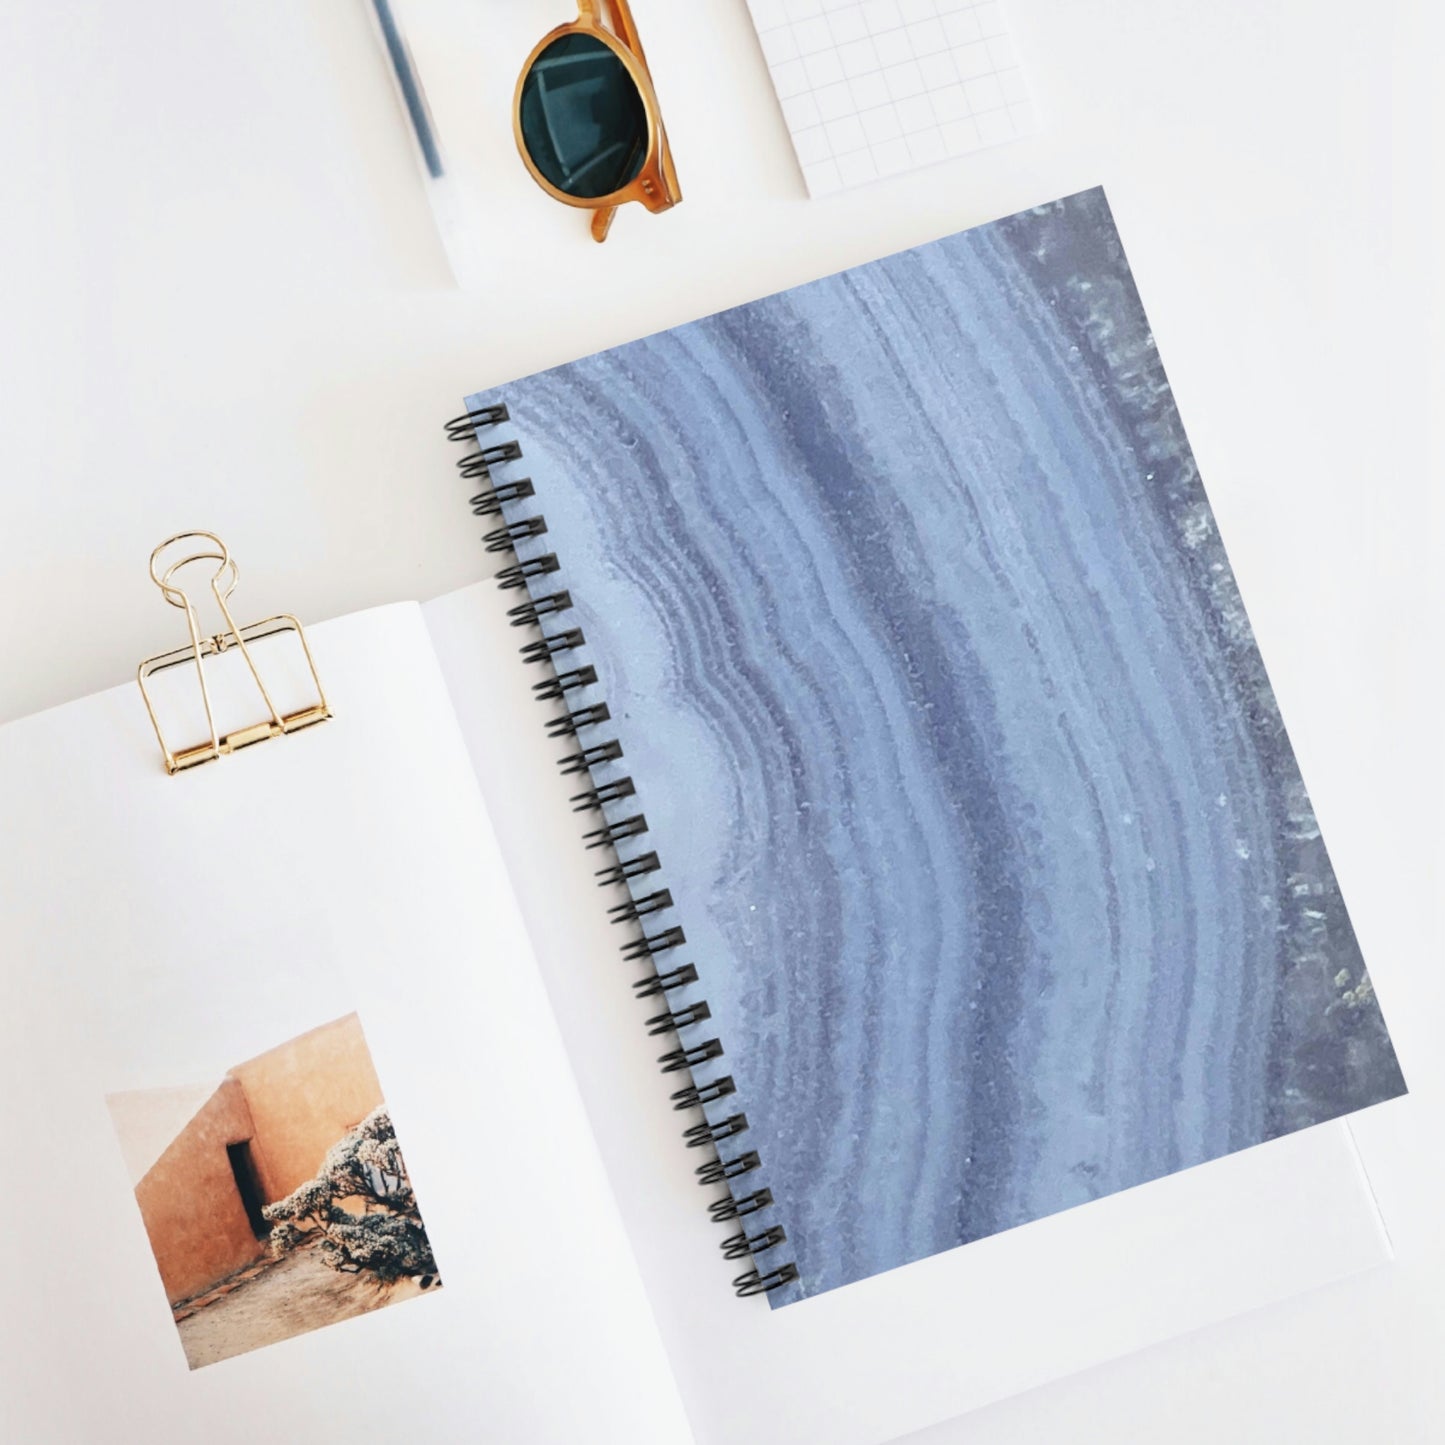 Blue Lace Agate Design Spiral Notebook - Ruled Line